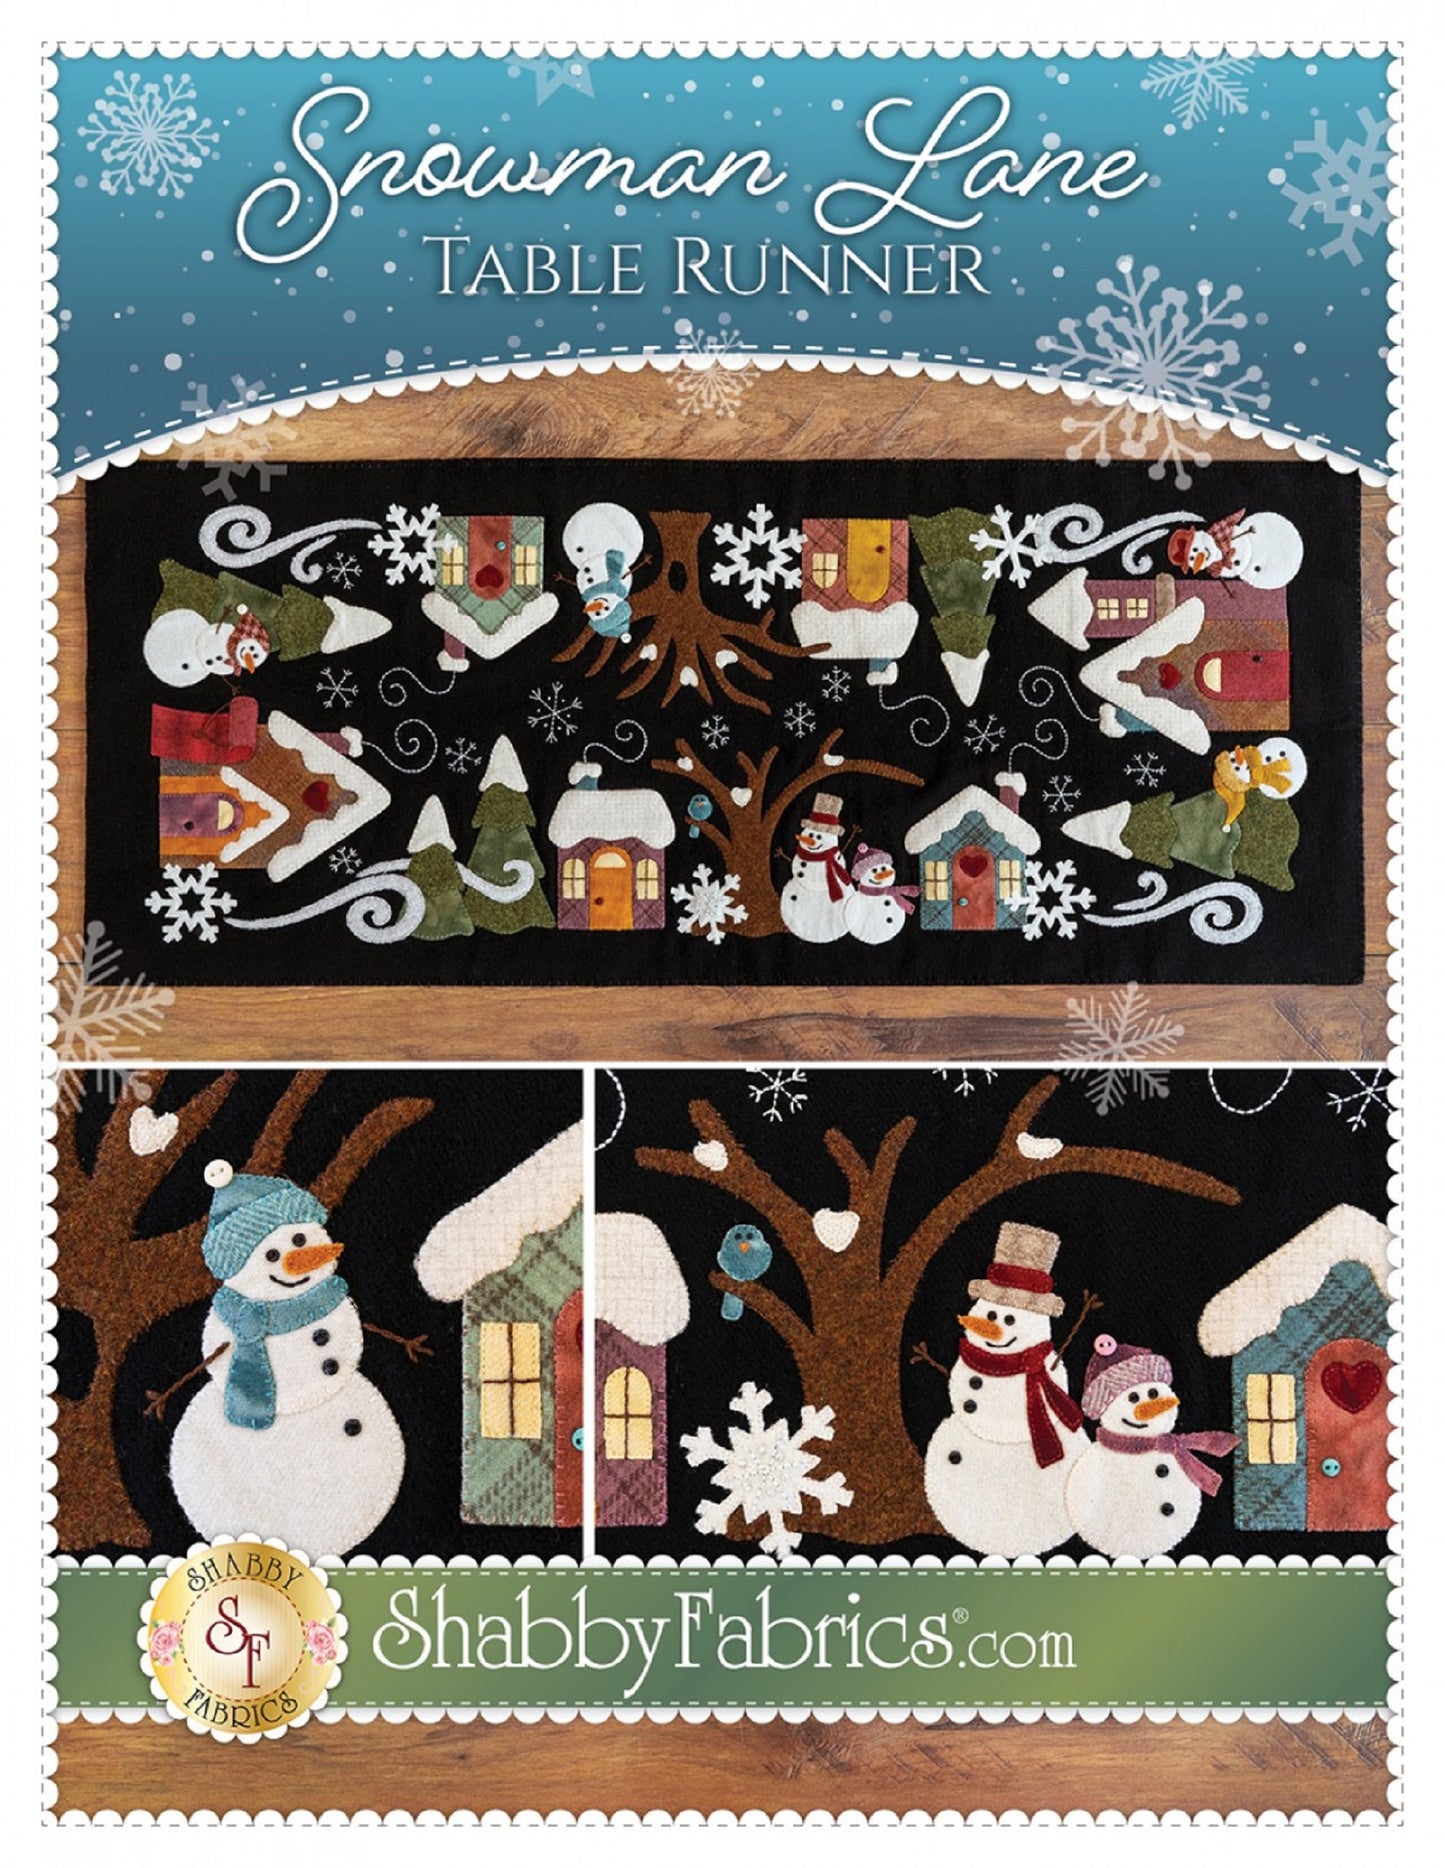 Snowman Lane Table Runner by Shabby Fabrics